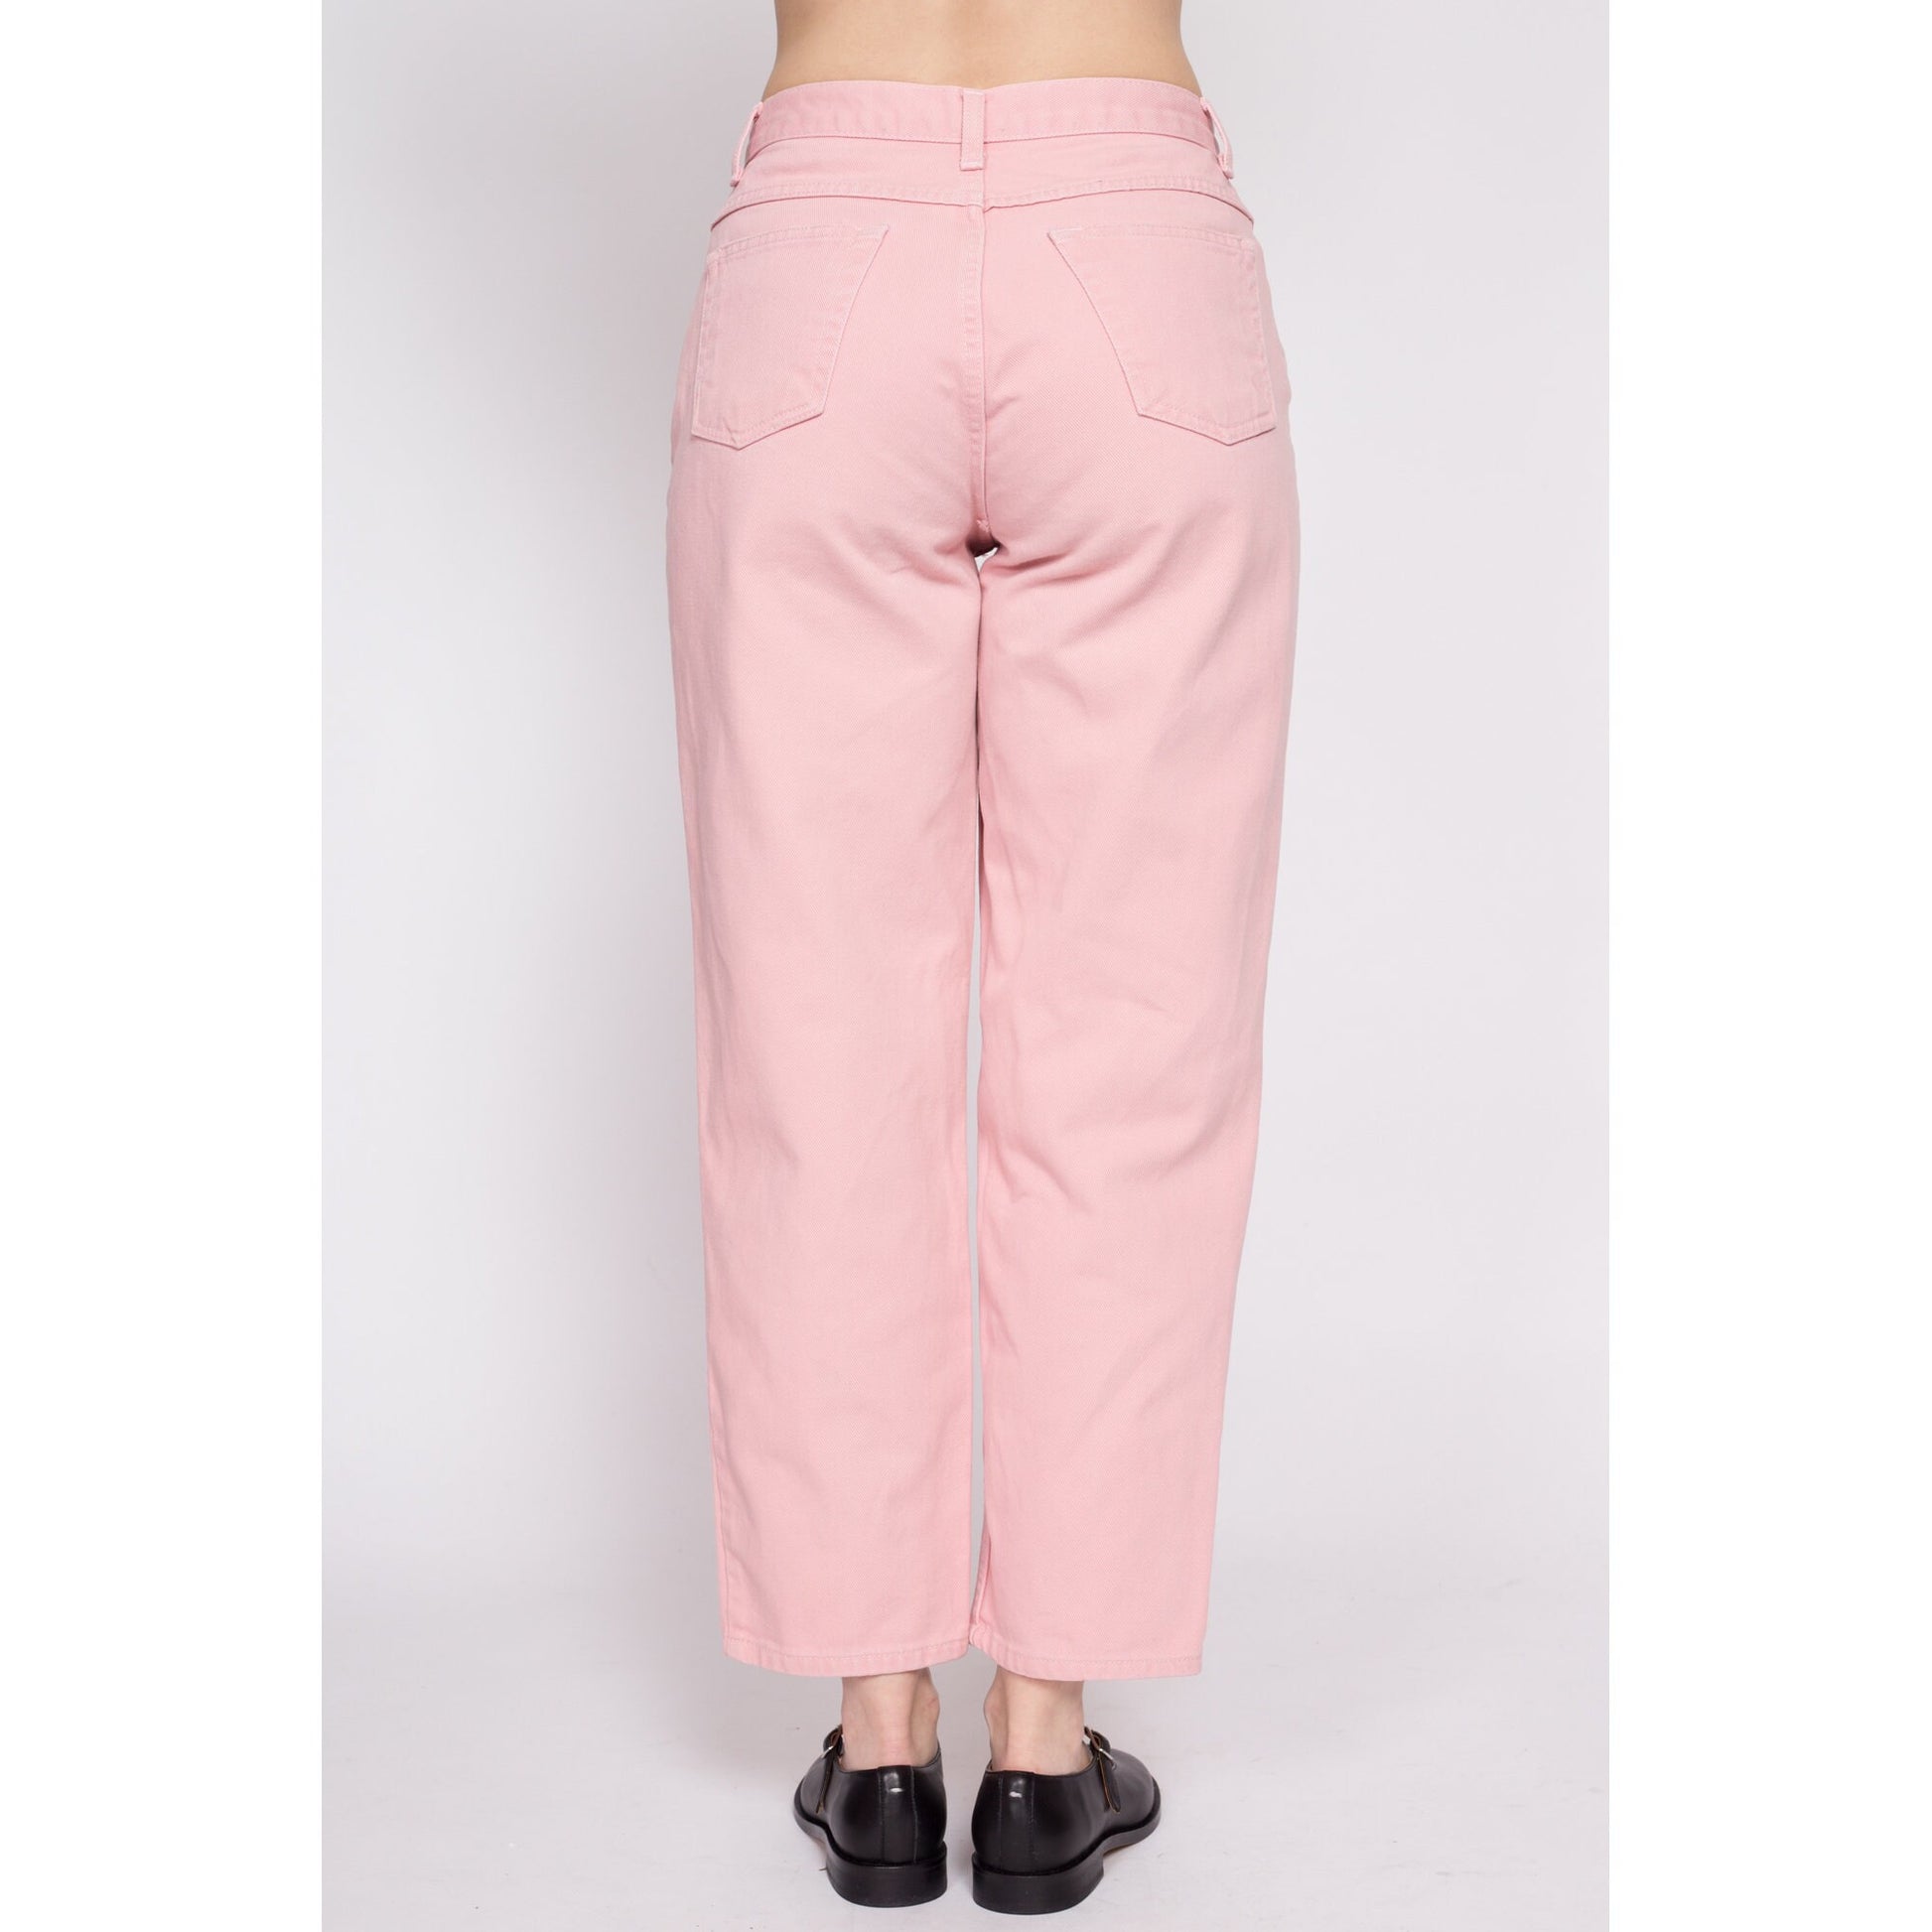 90s Blush Pink High Waisted Jeans - Petite Medium, 28.5" | Vintage Newport News Pastel Denim Tapered Leg Mom Jeans